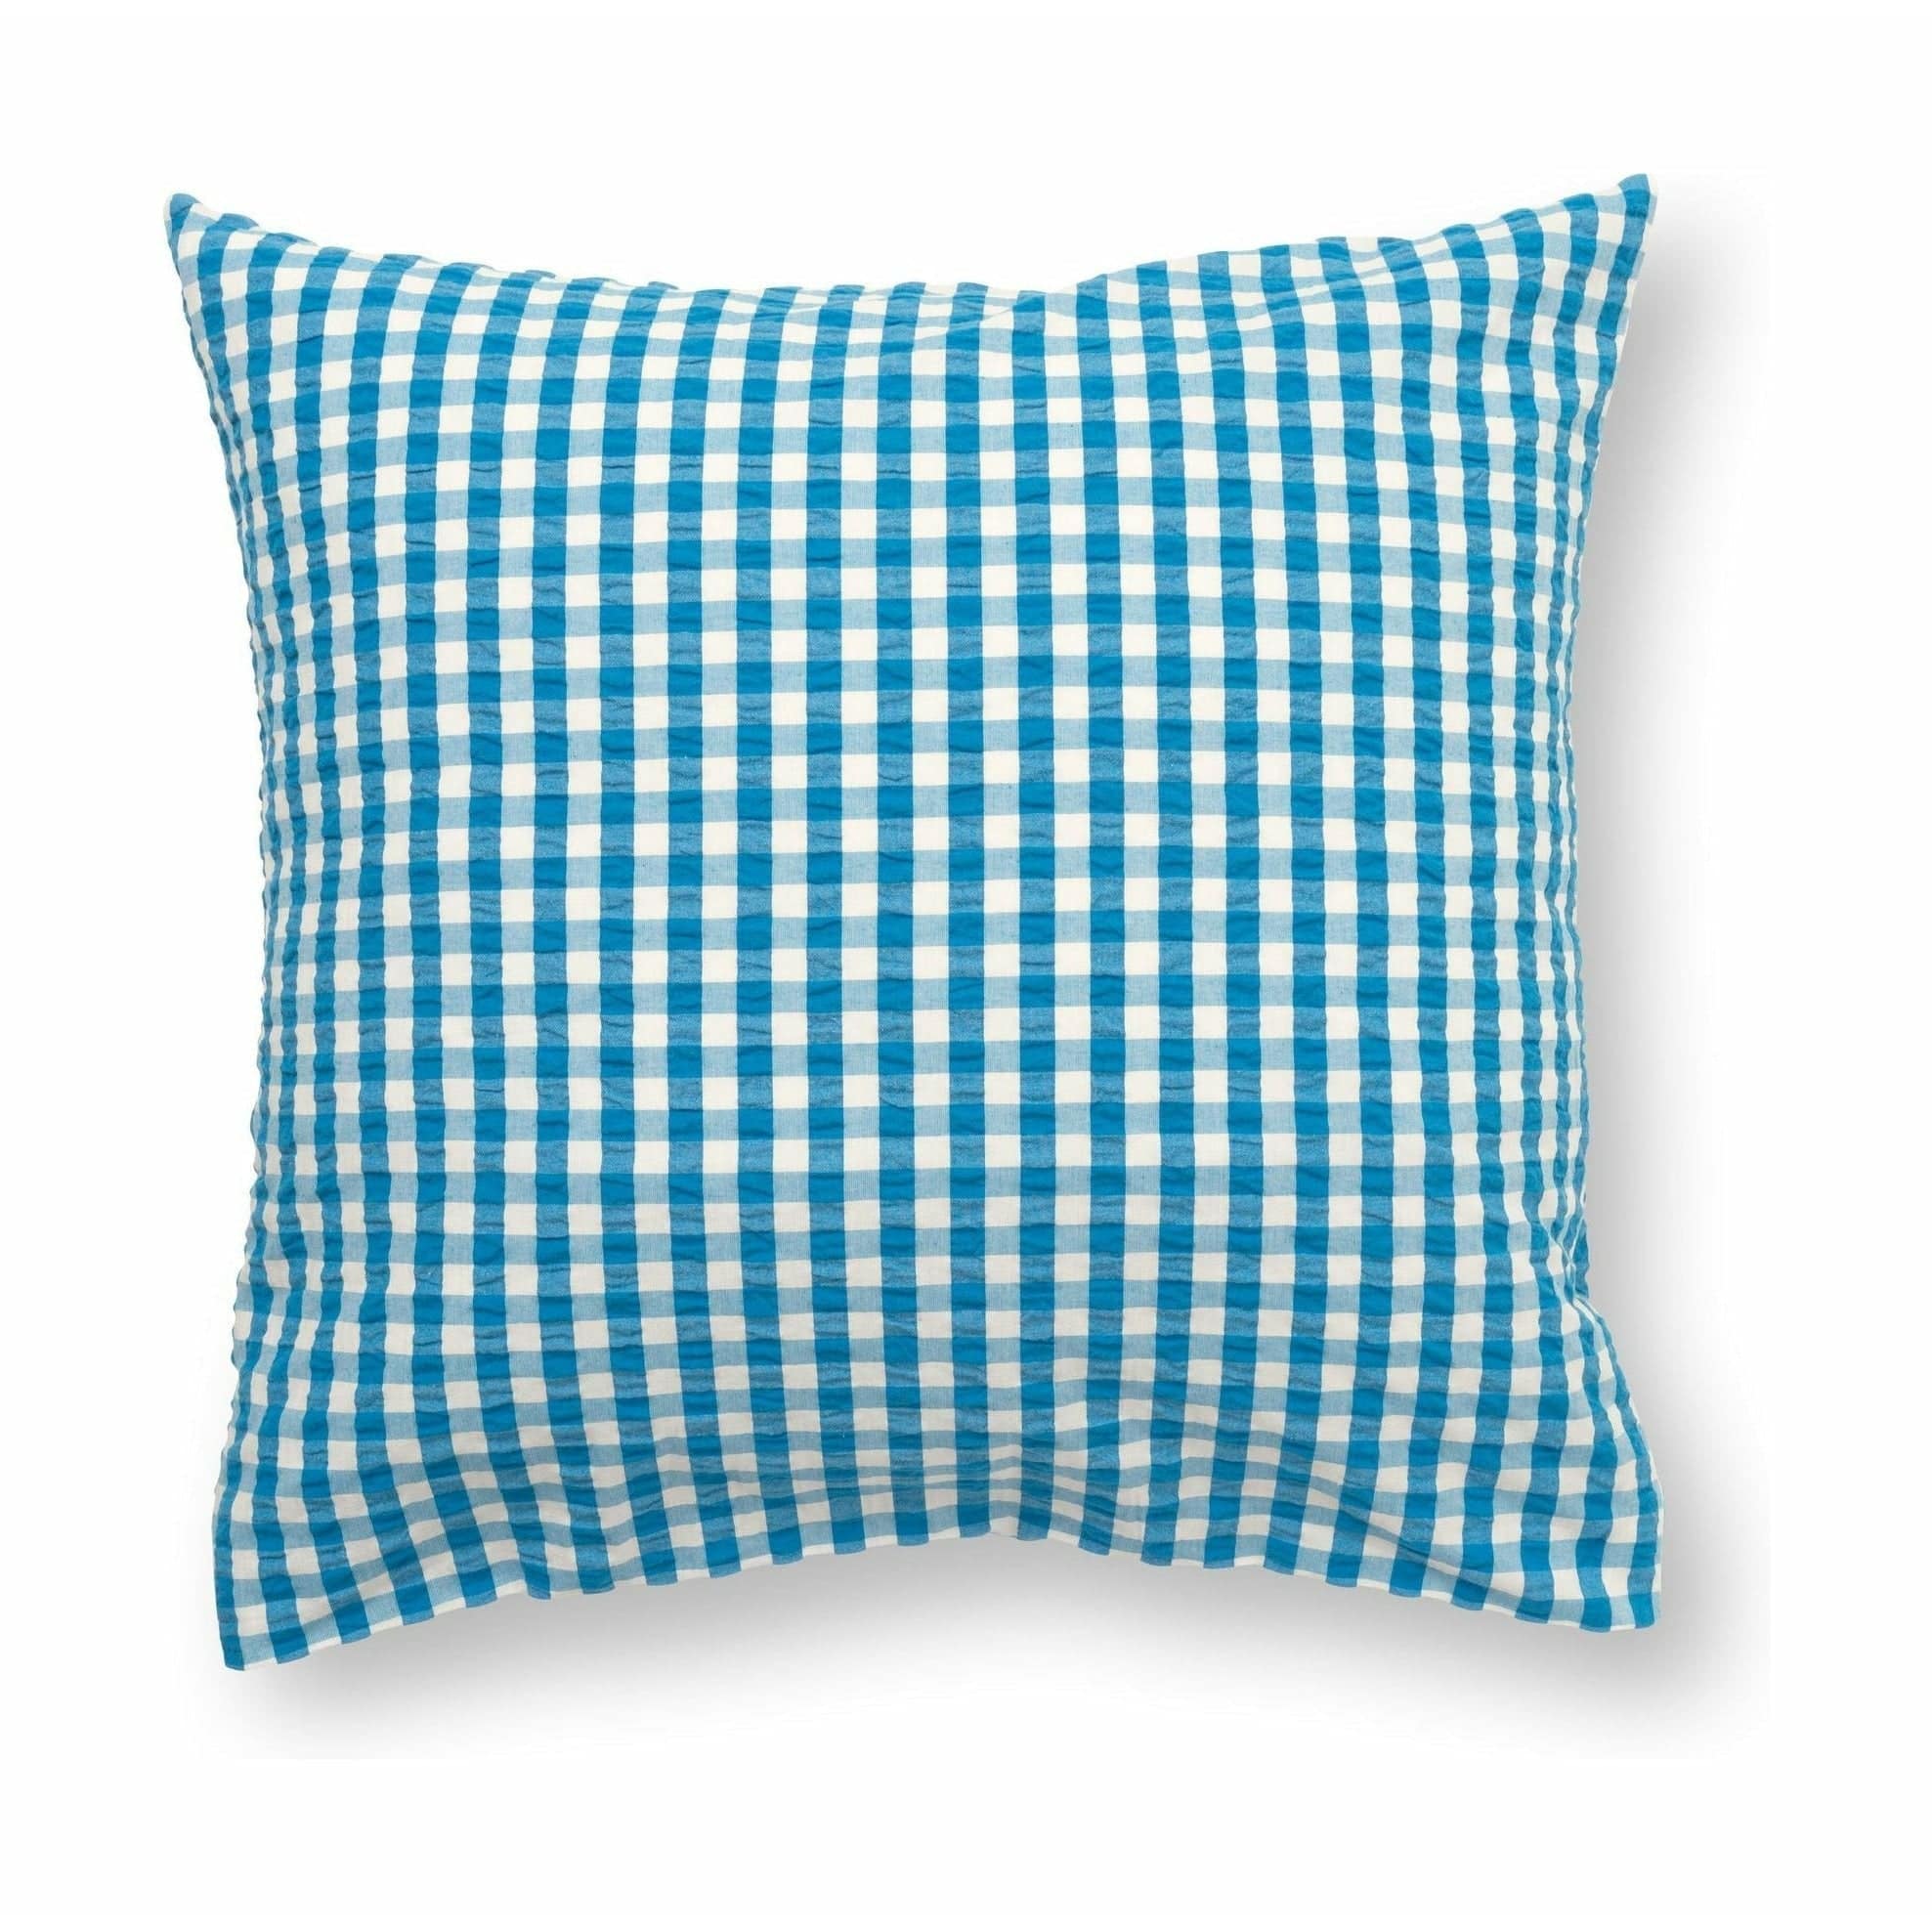 Juna Bæk y Bølge Pillowcase de 63x60 cm, azul/abedul